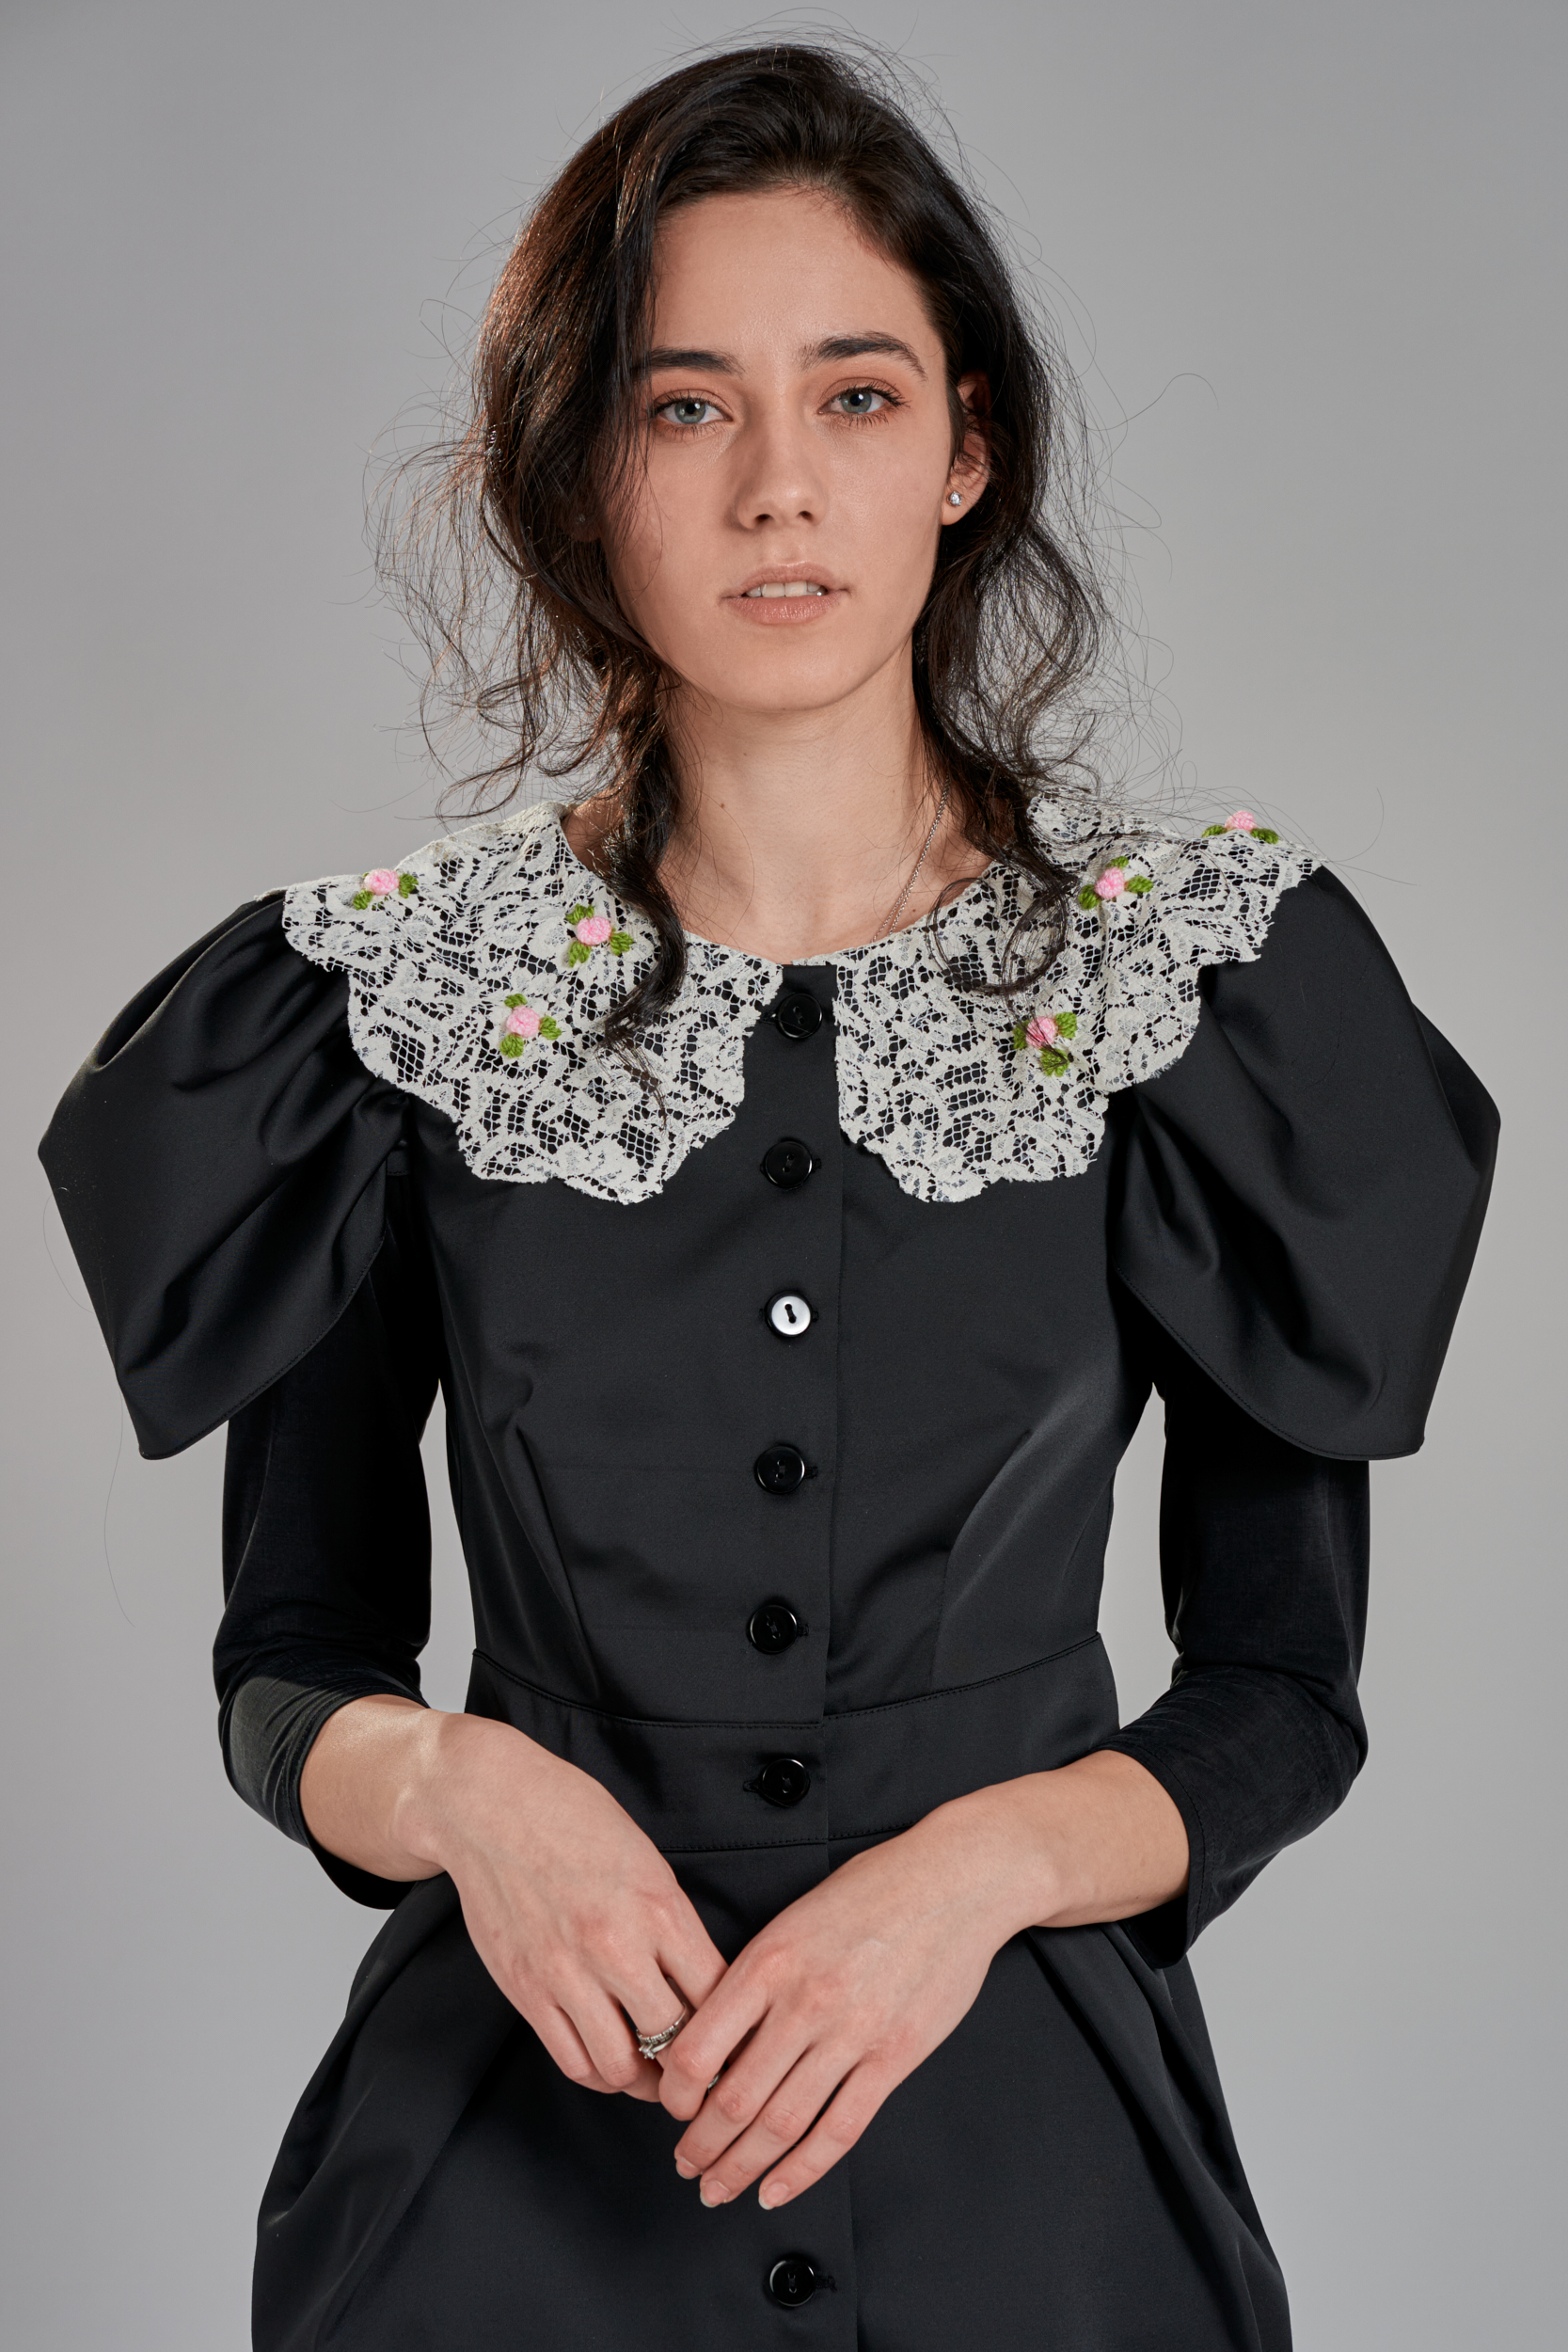 Dress ISIDORA. Natural fabrics, original design, handmade embroidery